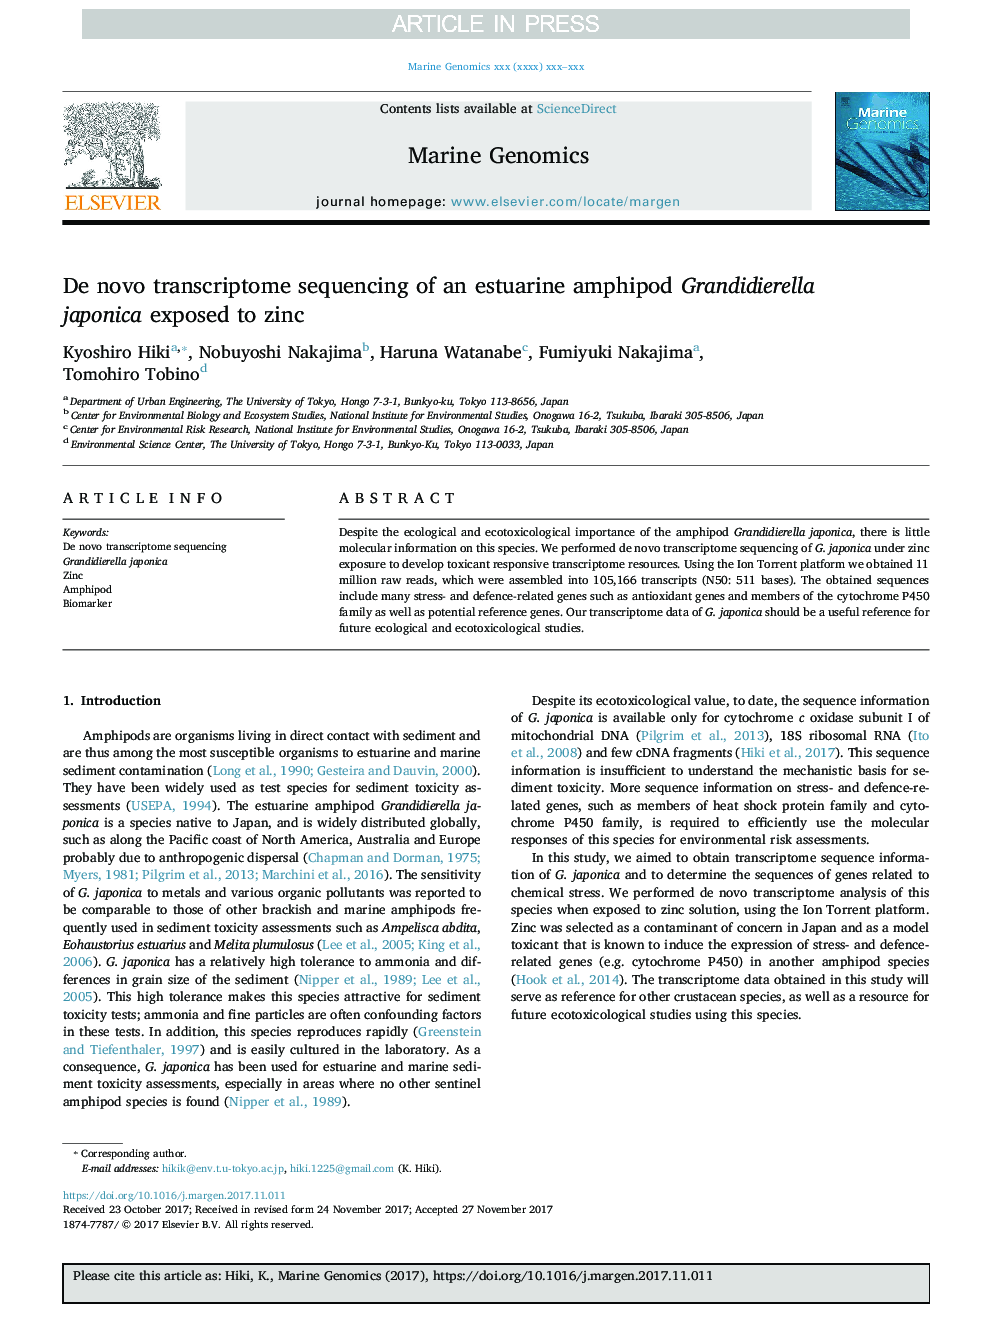 De novo transcriptome sequencing of an estuarine amphipod Grandidierella japonica exposed to zinc